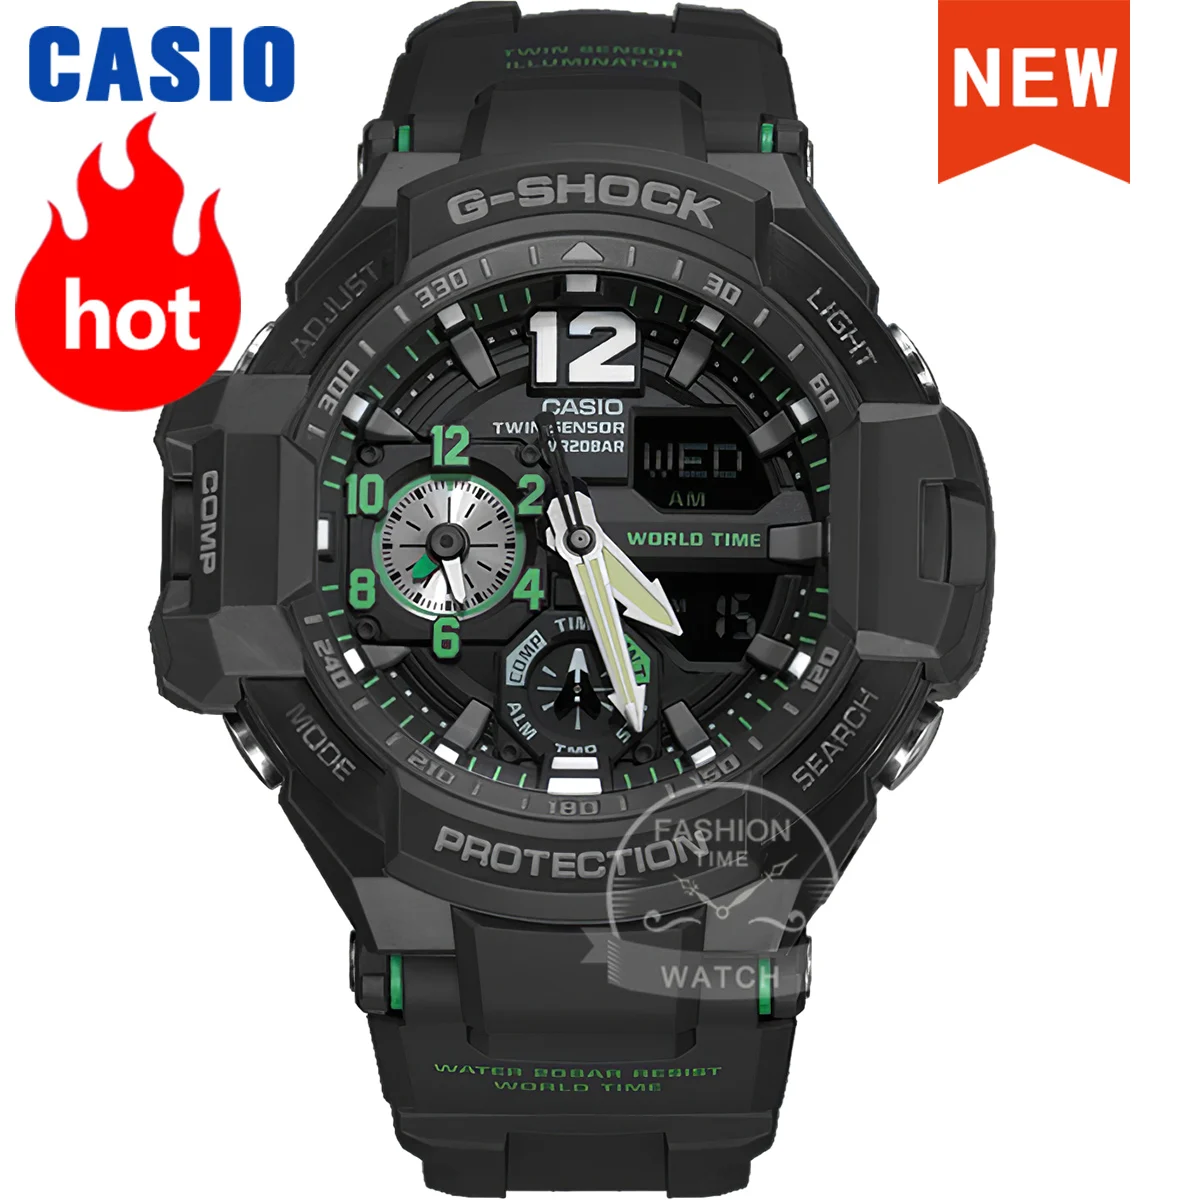 

Casio g shock top luxury Sport diving quartz LED digital Military watch for men relogio masculino часы мужские GA-1100-1A3